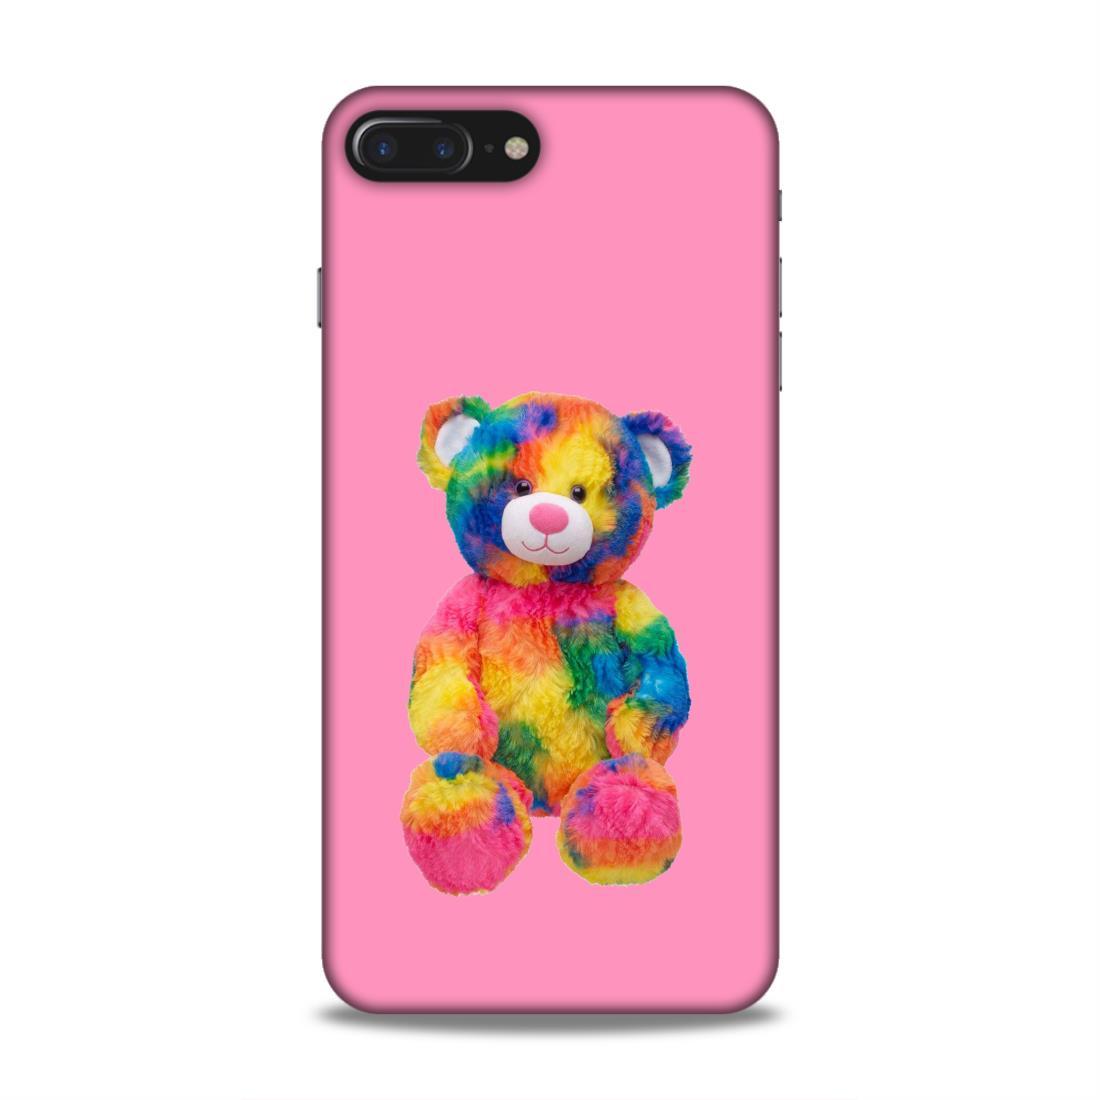 Multicolour Teddy Bear iPhone 8 Plus Mobile Case Cover